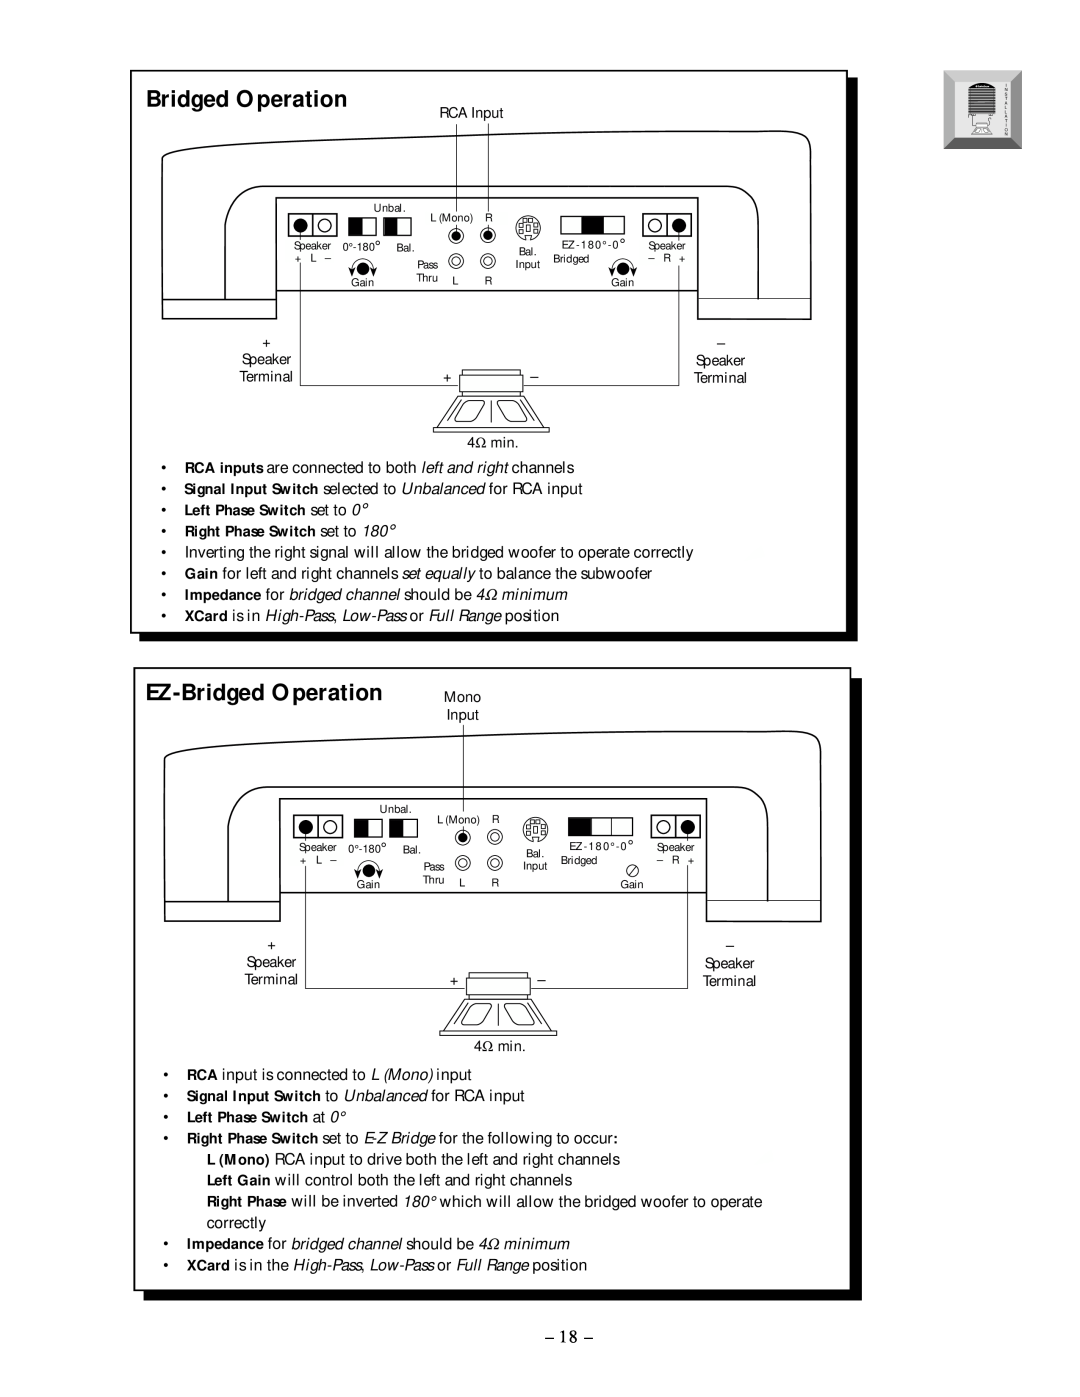 Rockford Fosgate 250.1 manual Bridged Operation, EZ-BridgedOperation, Left Phase Switch set to, Right Phase Switch set to 